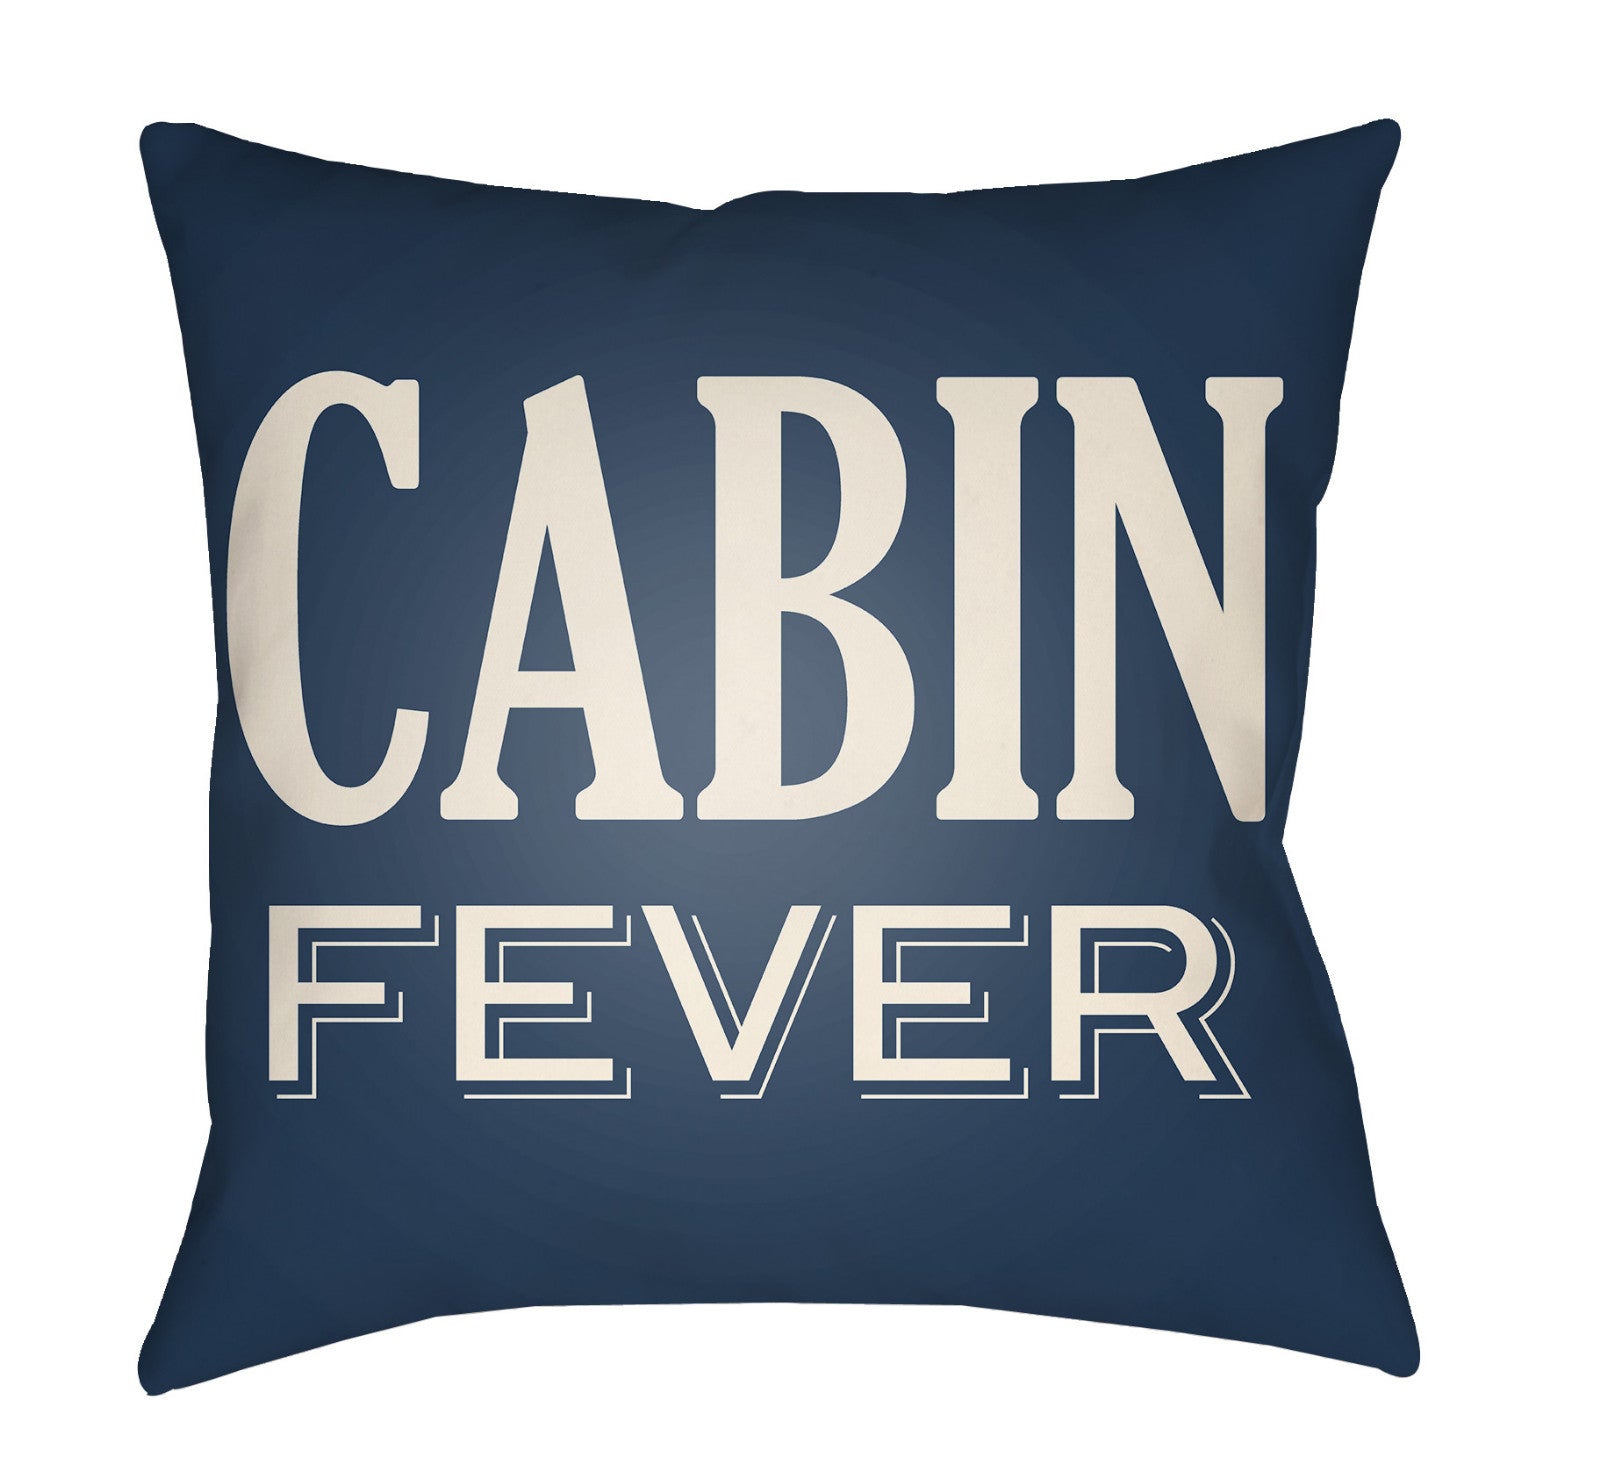 Artistic Weavers Lodge Cabin Fever Navy Blue/Beige main image